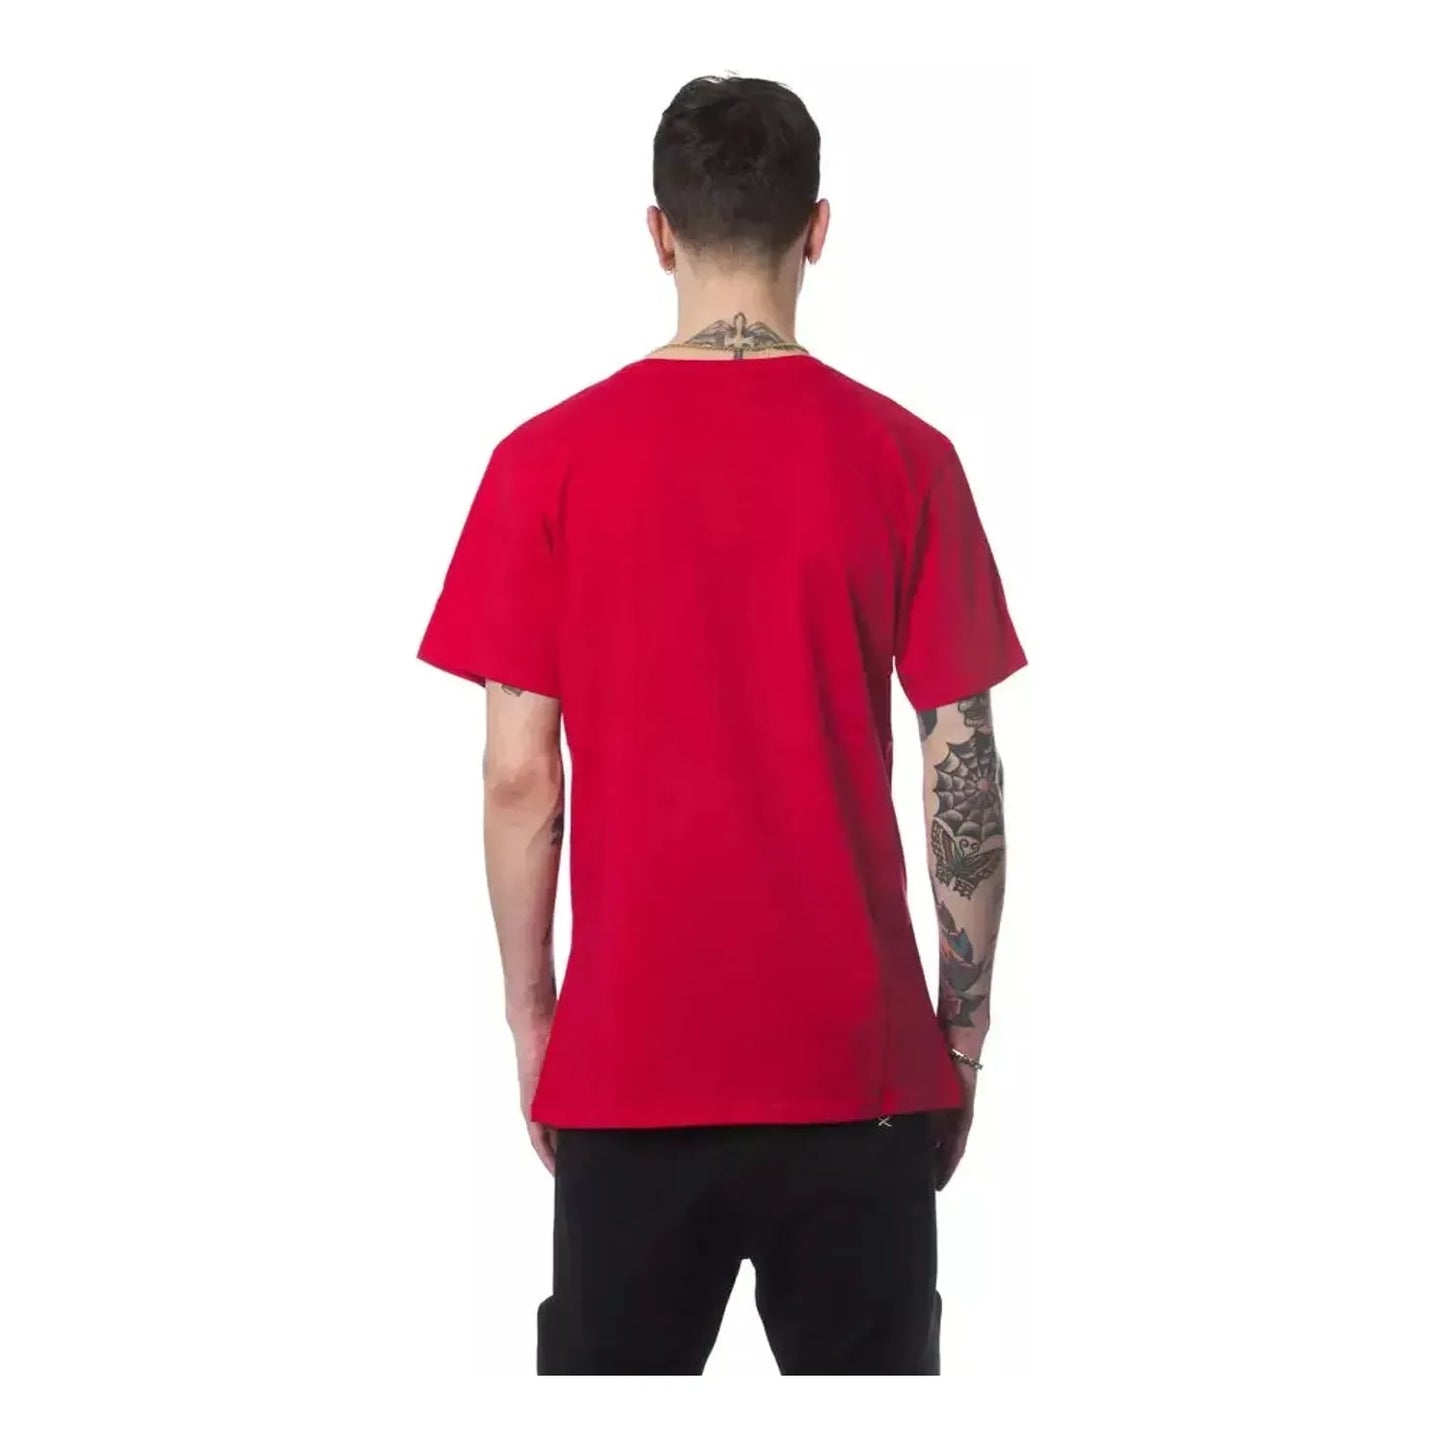 Nicolo Tonetto Elegant Red Round Neck Cotton Tee rosso-red-t-shirt